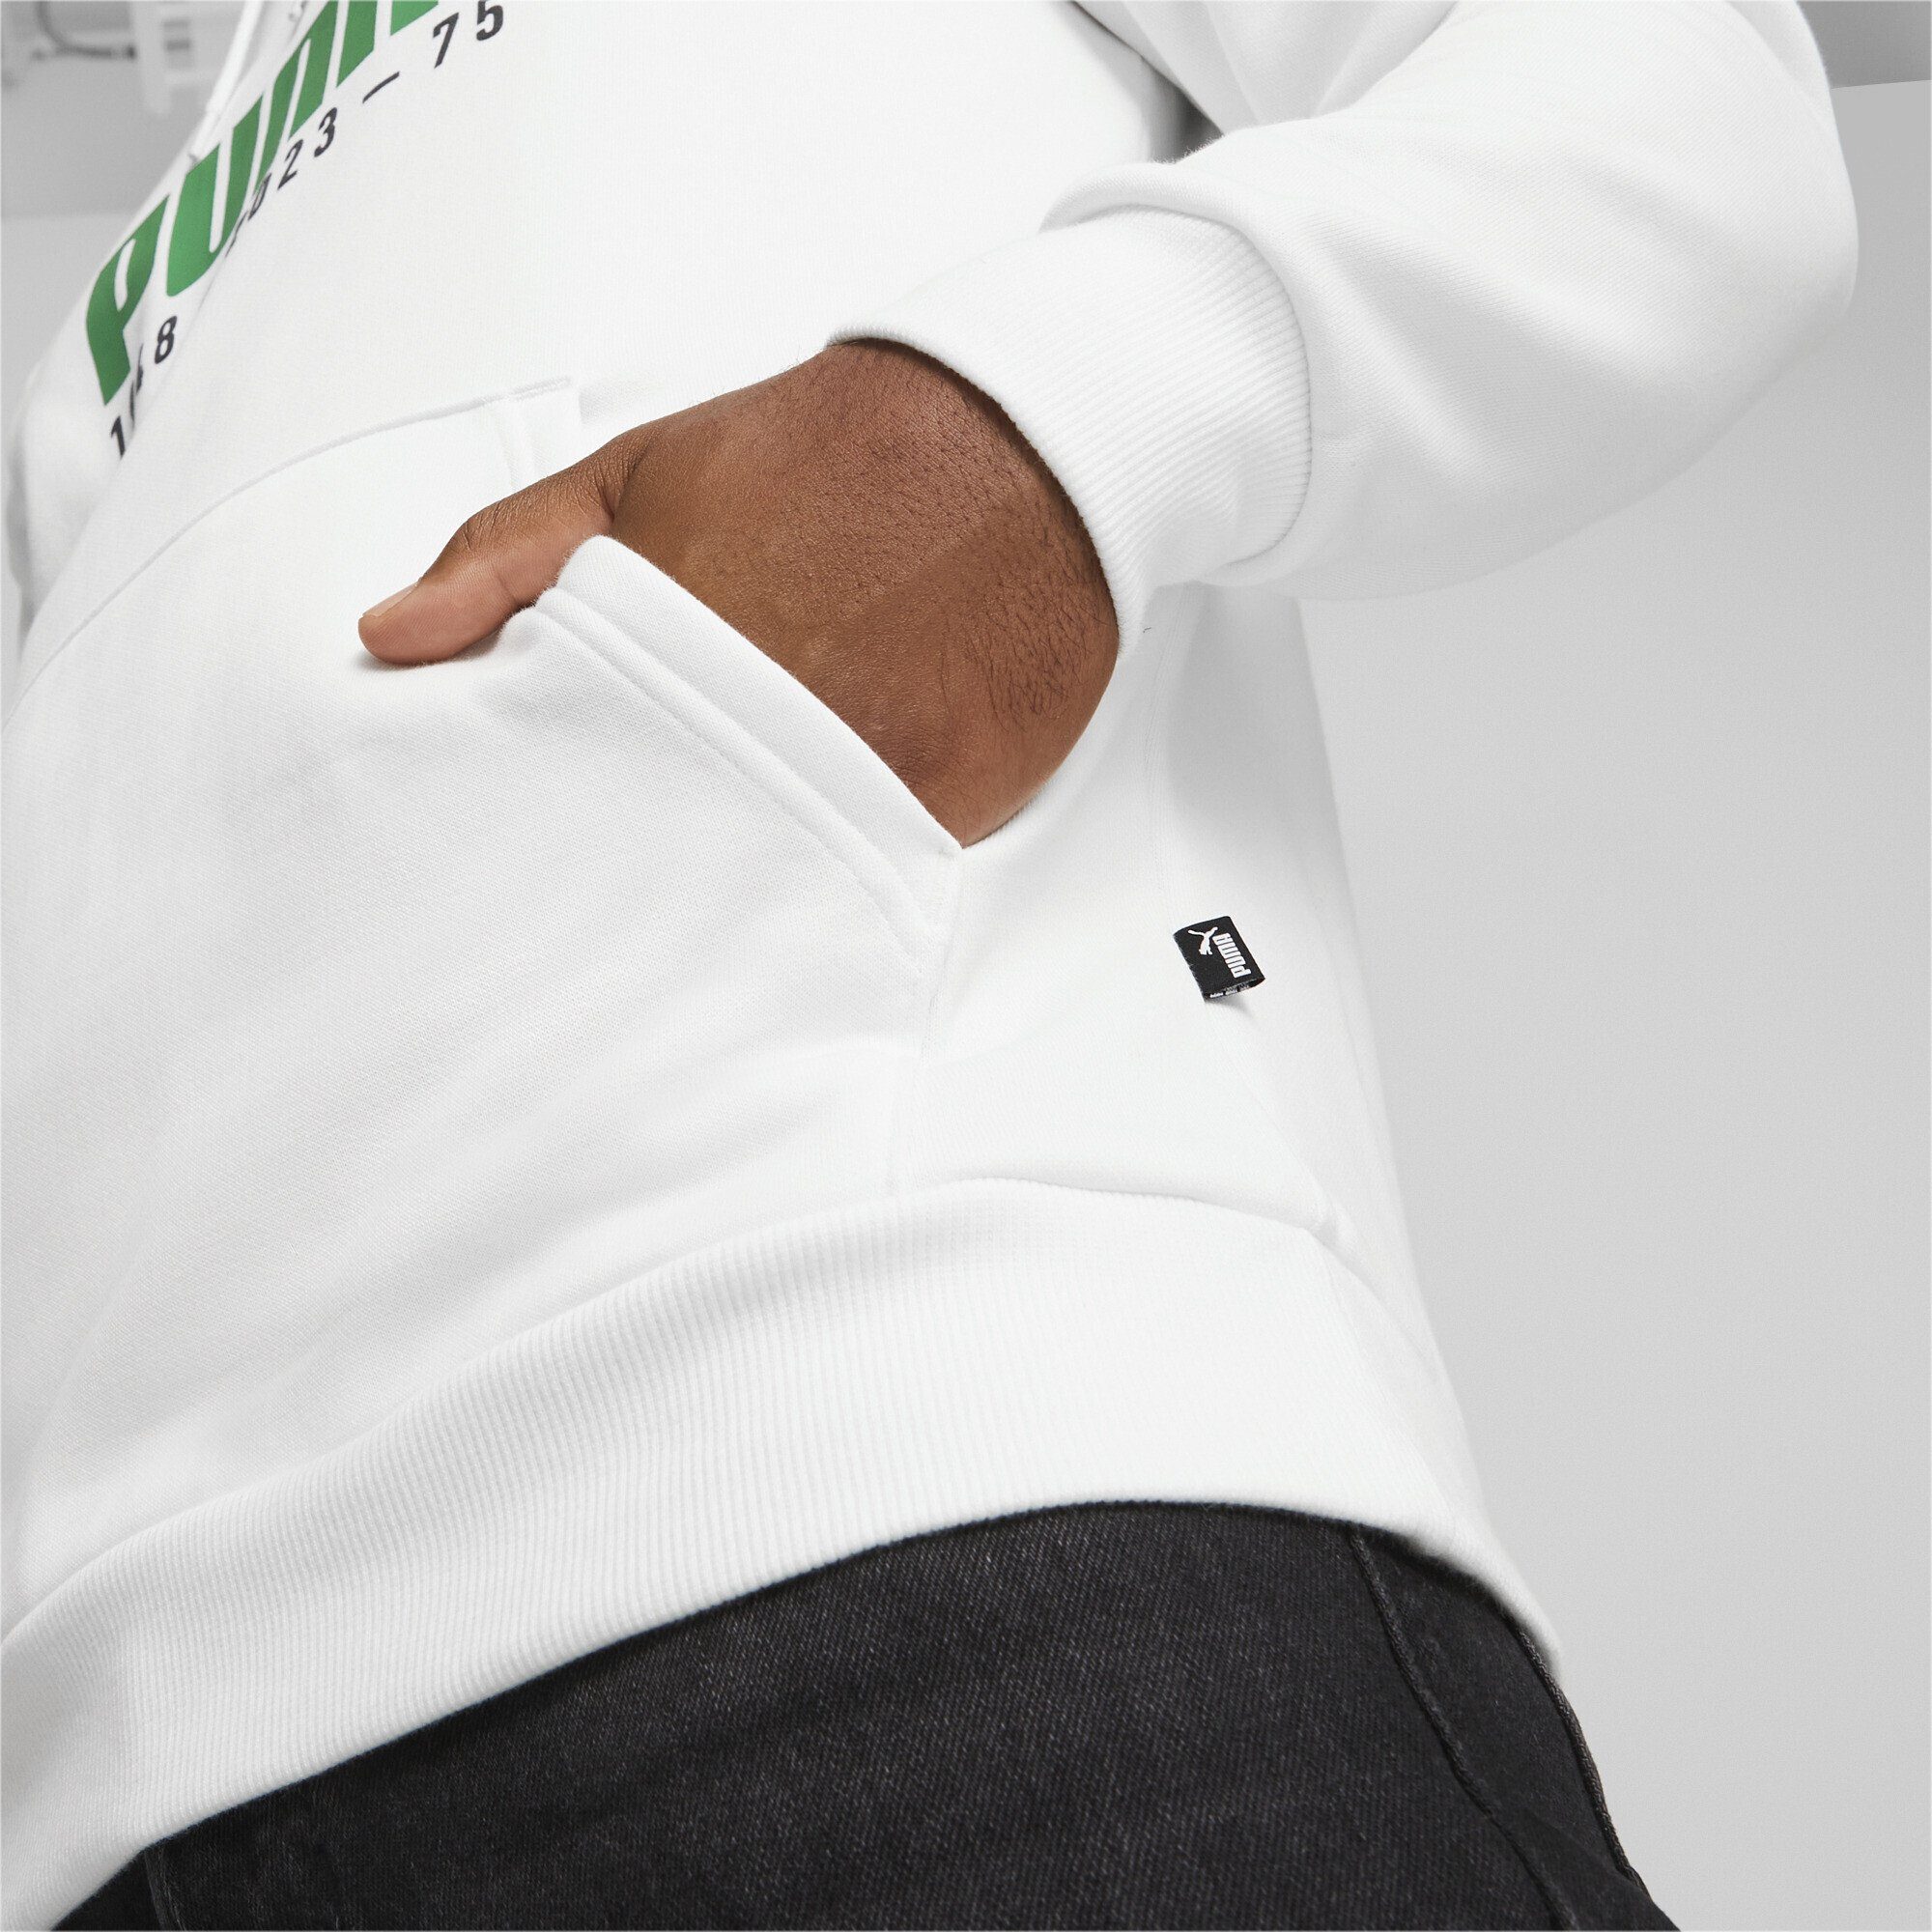 Celebration White Sweatshirt Herren Hoodie 1 PUMA No. Logo